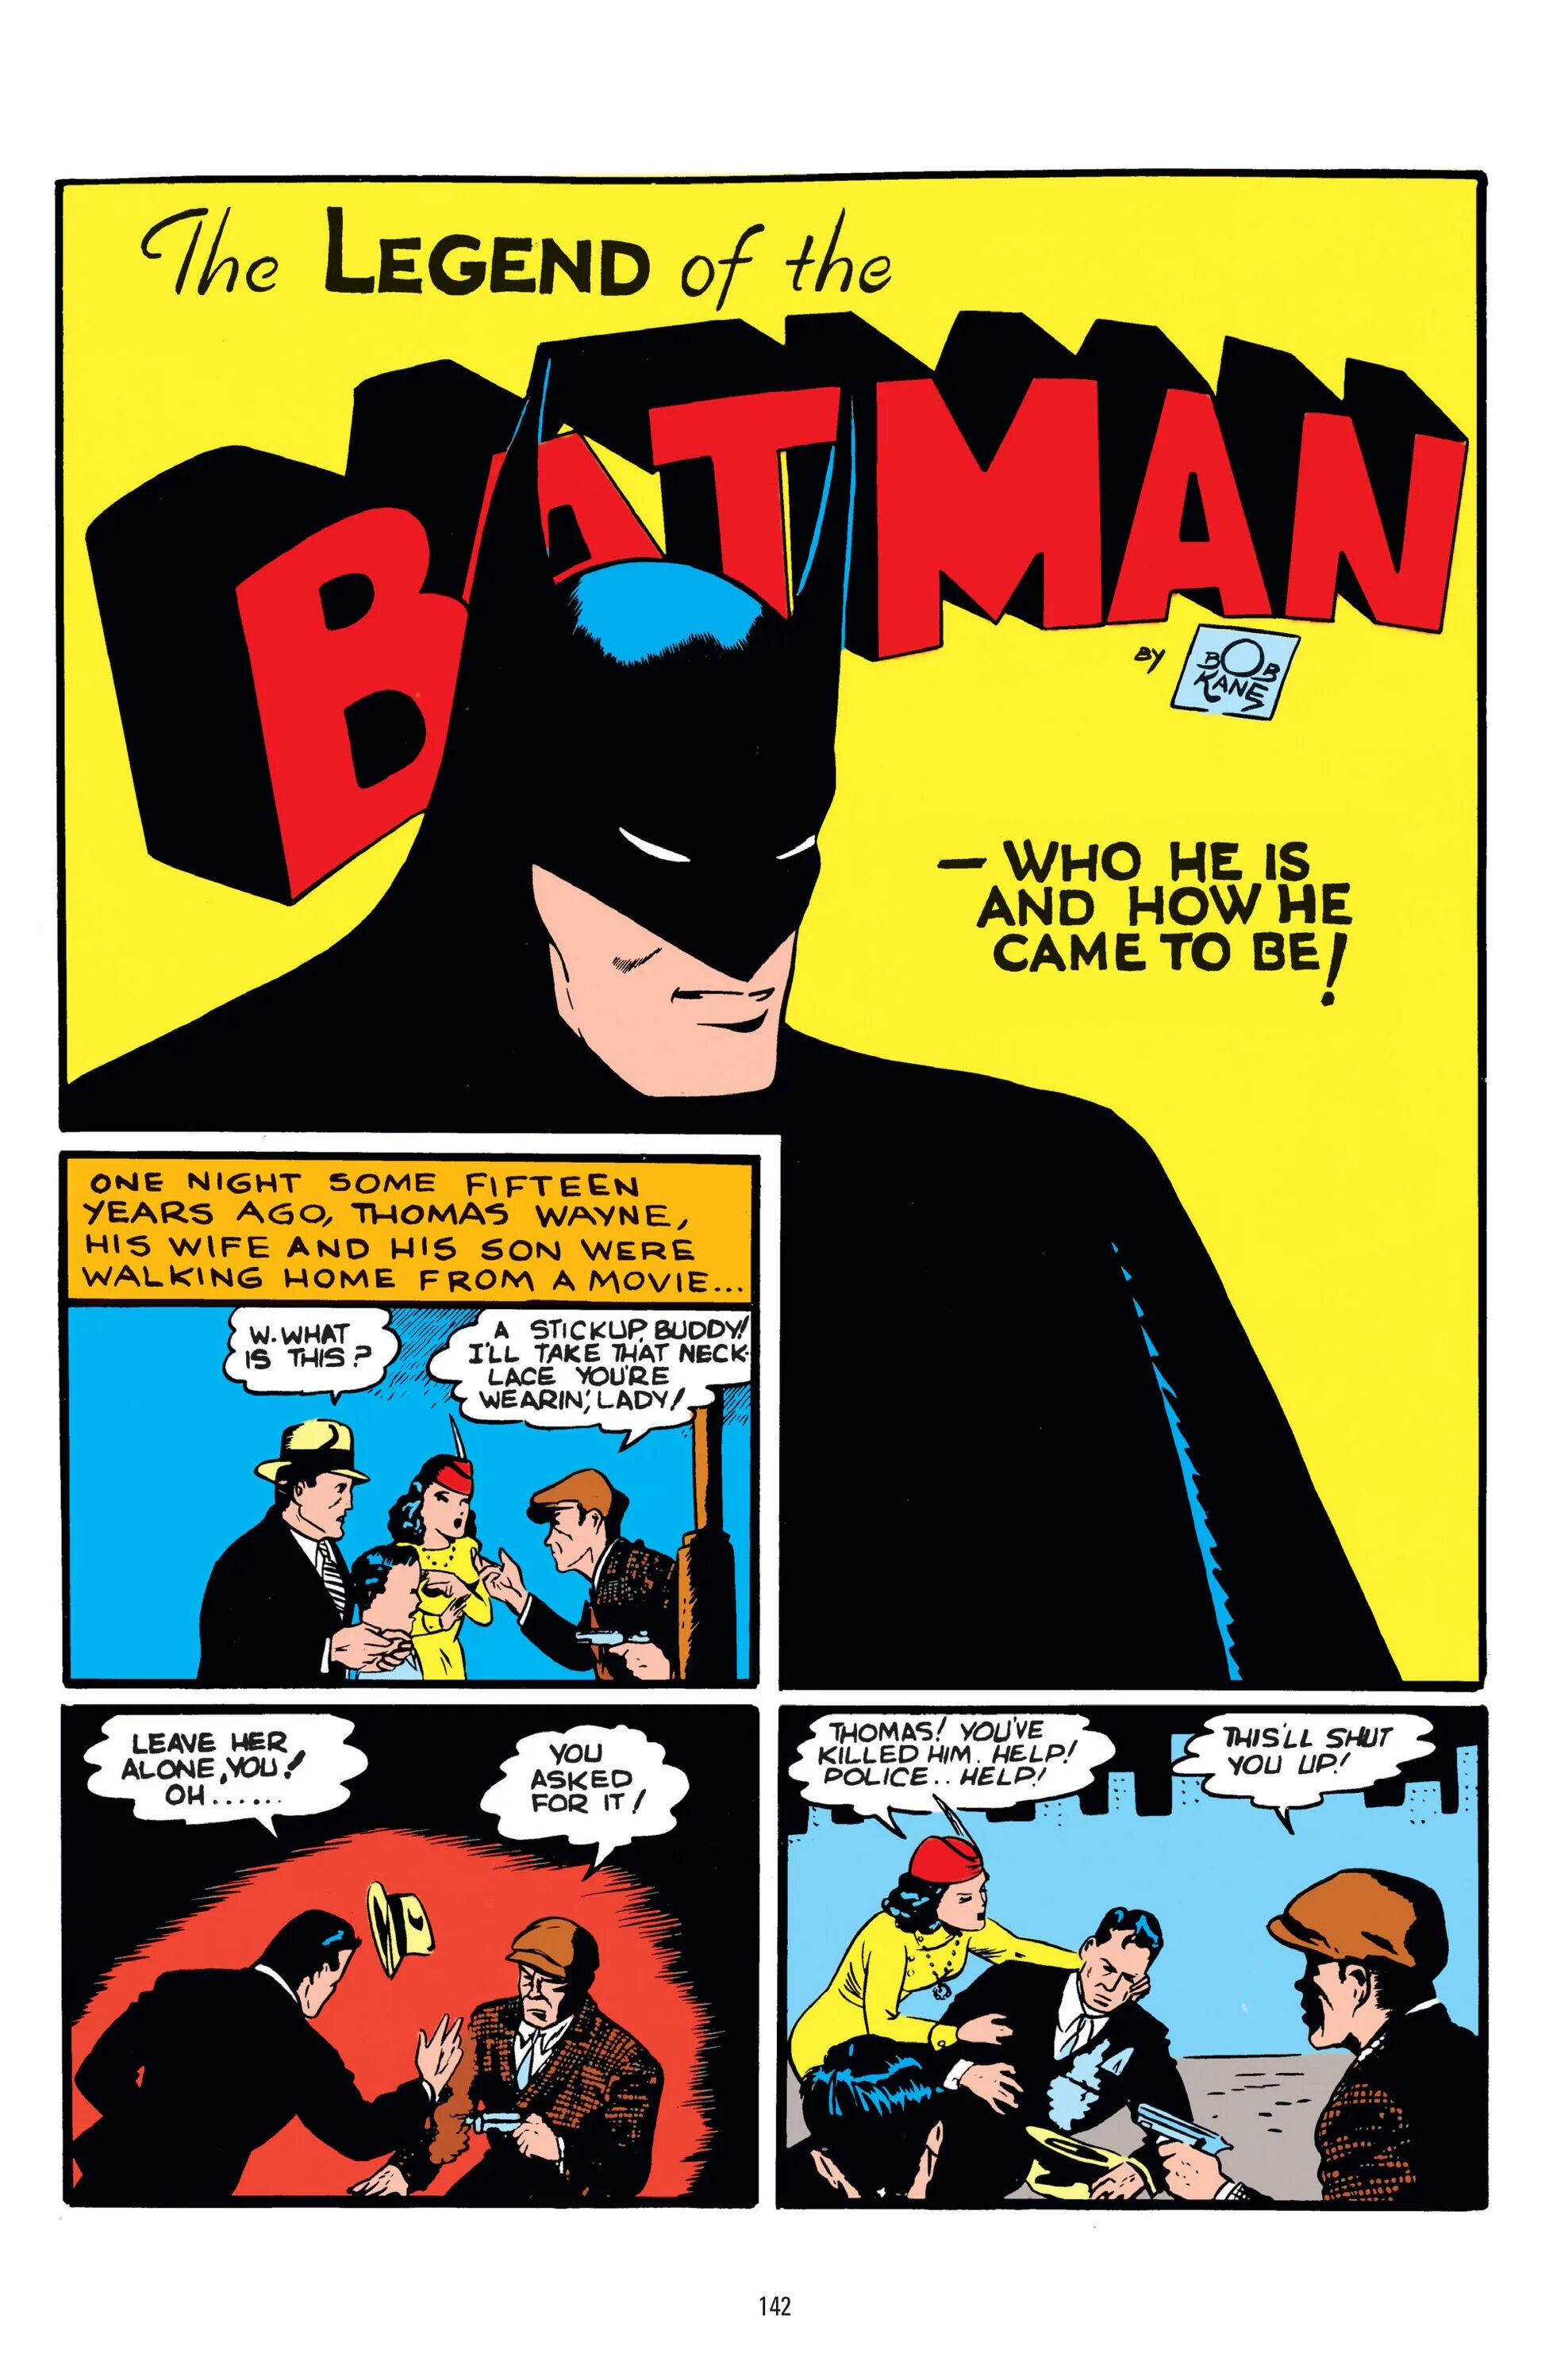 Первый комикс про Бэтмена. Бэтмен первый комикс. Самый первый комикс про Бэтмена. Бэтмен 1940. Бэтмен первые комиксы